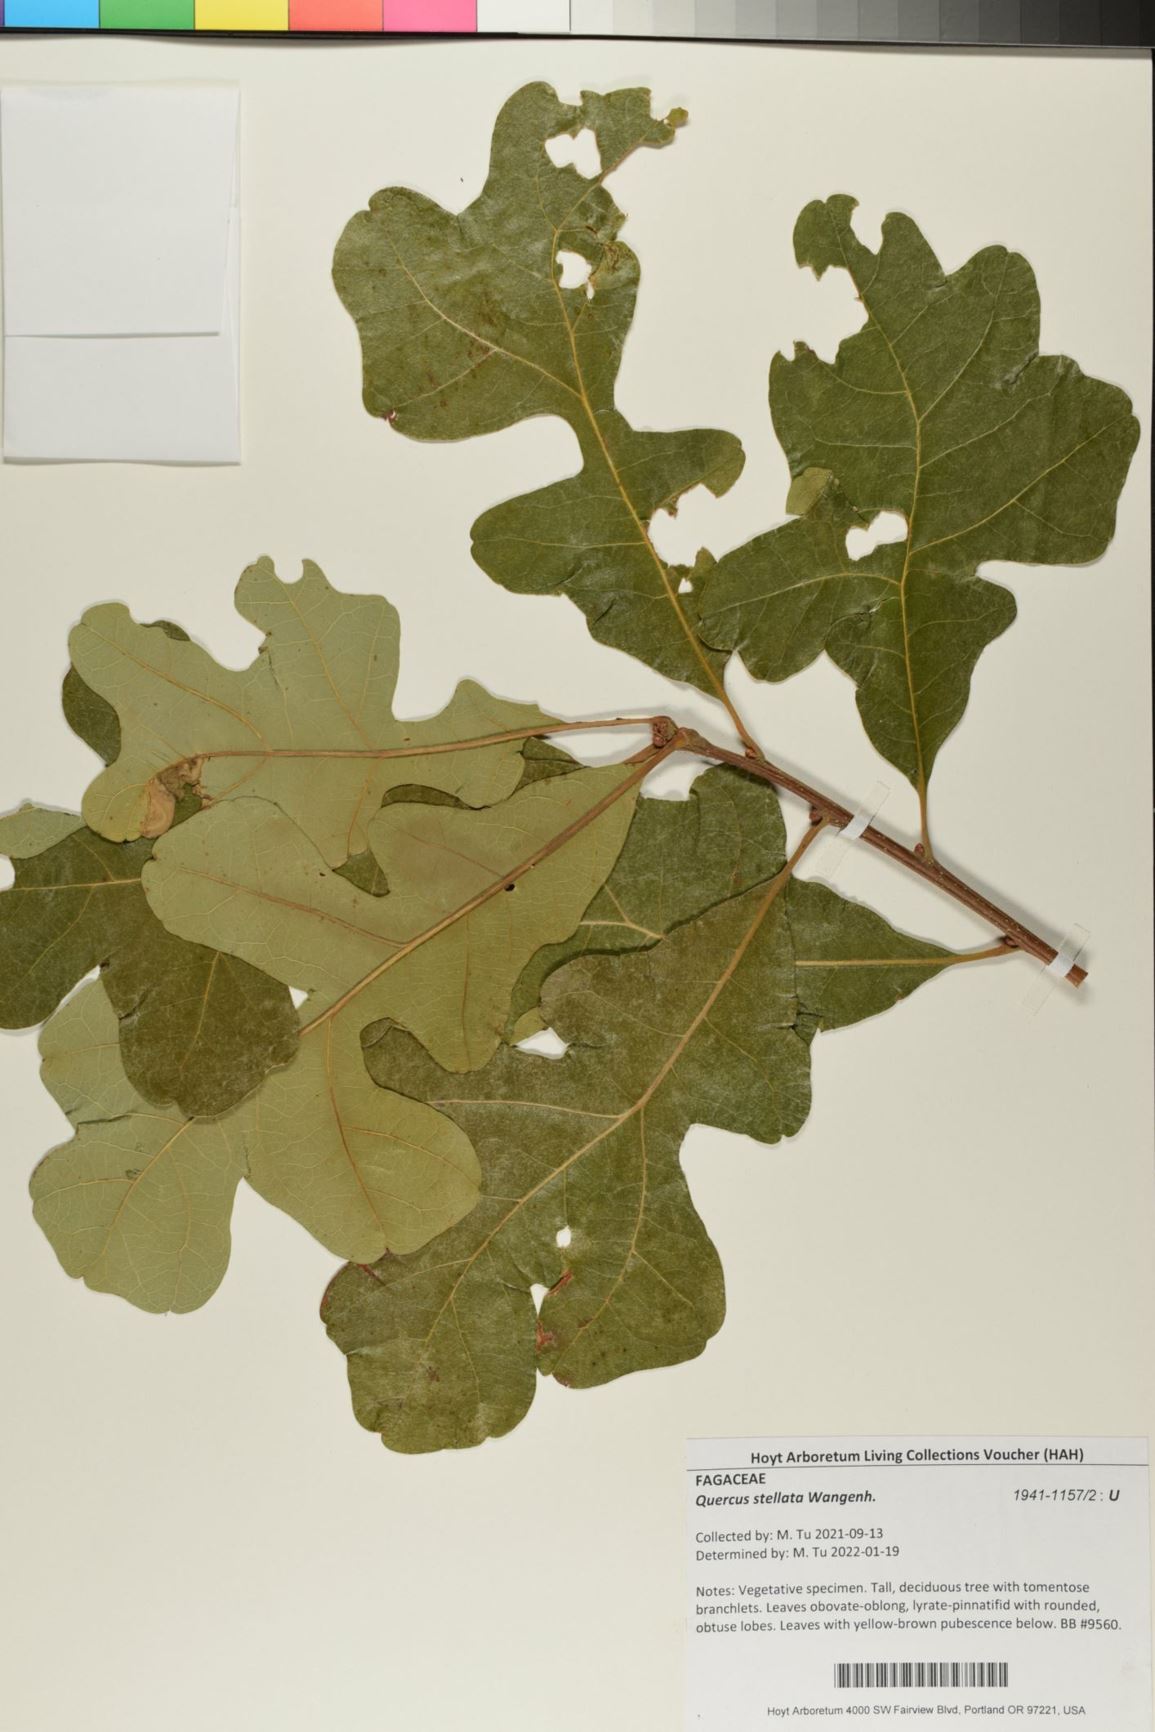 Quercus stellata - Post Oak